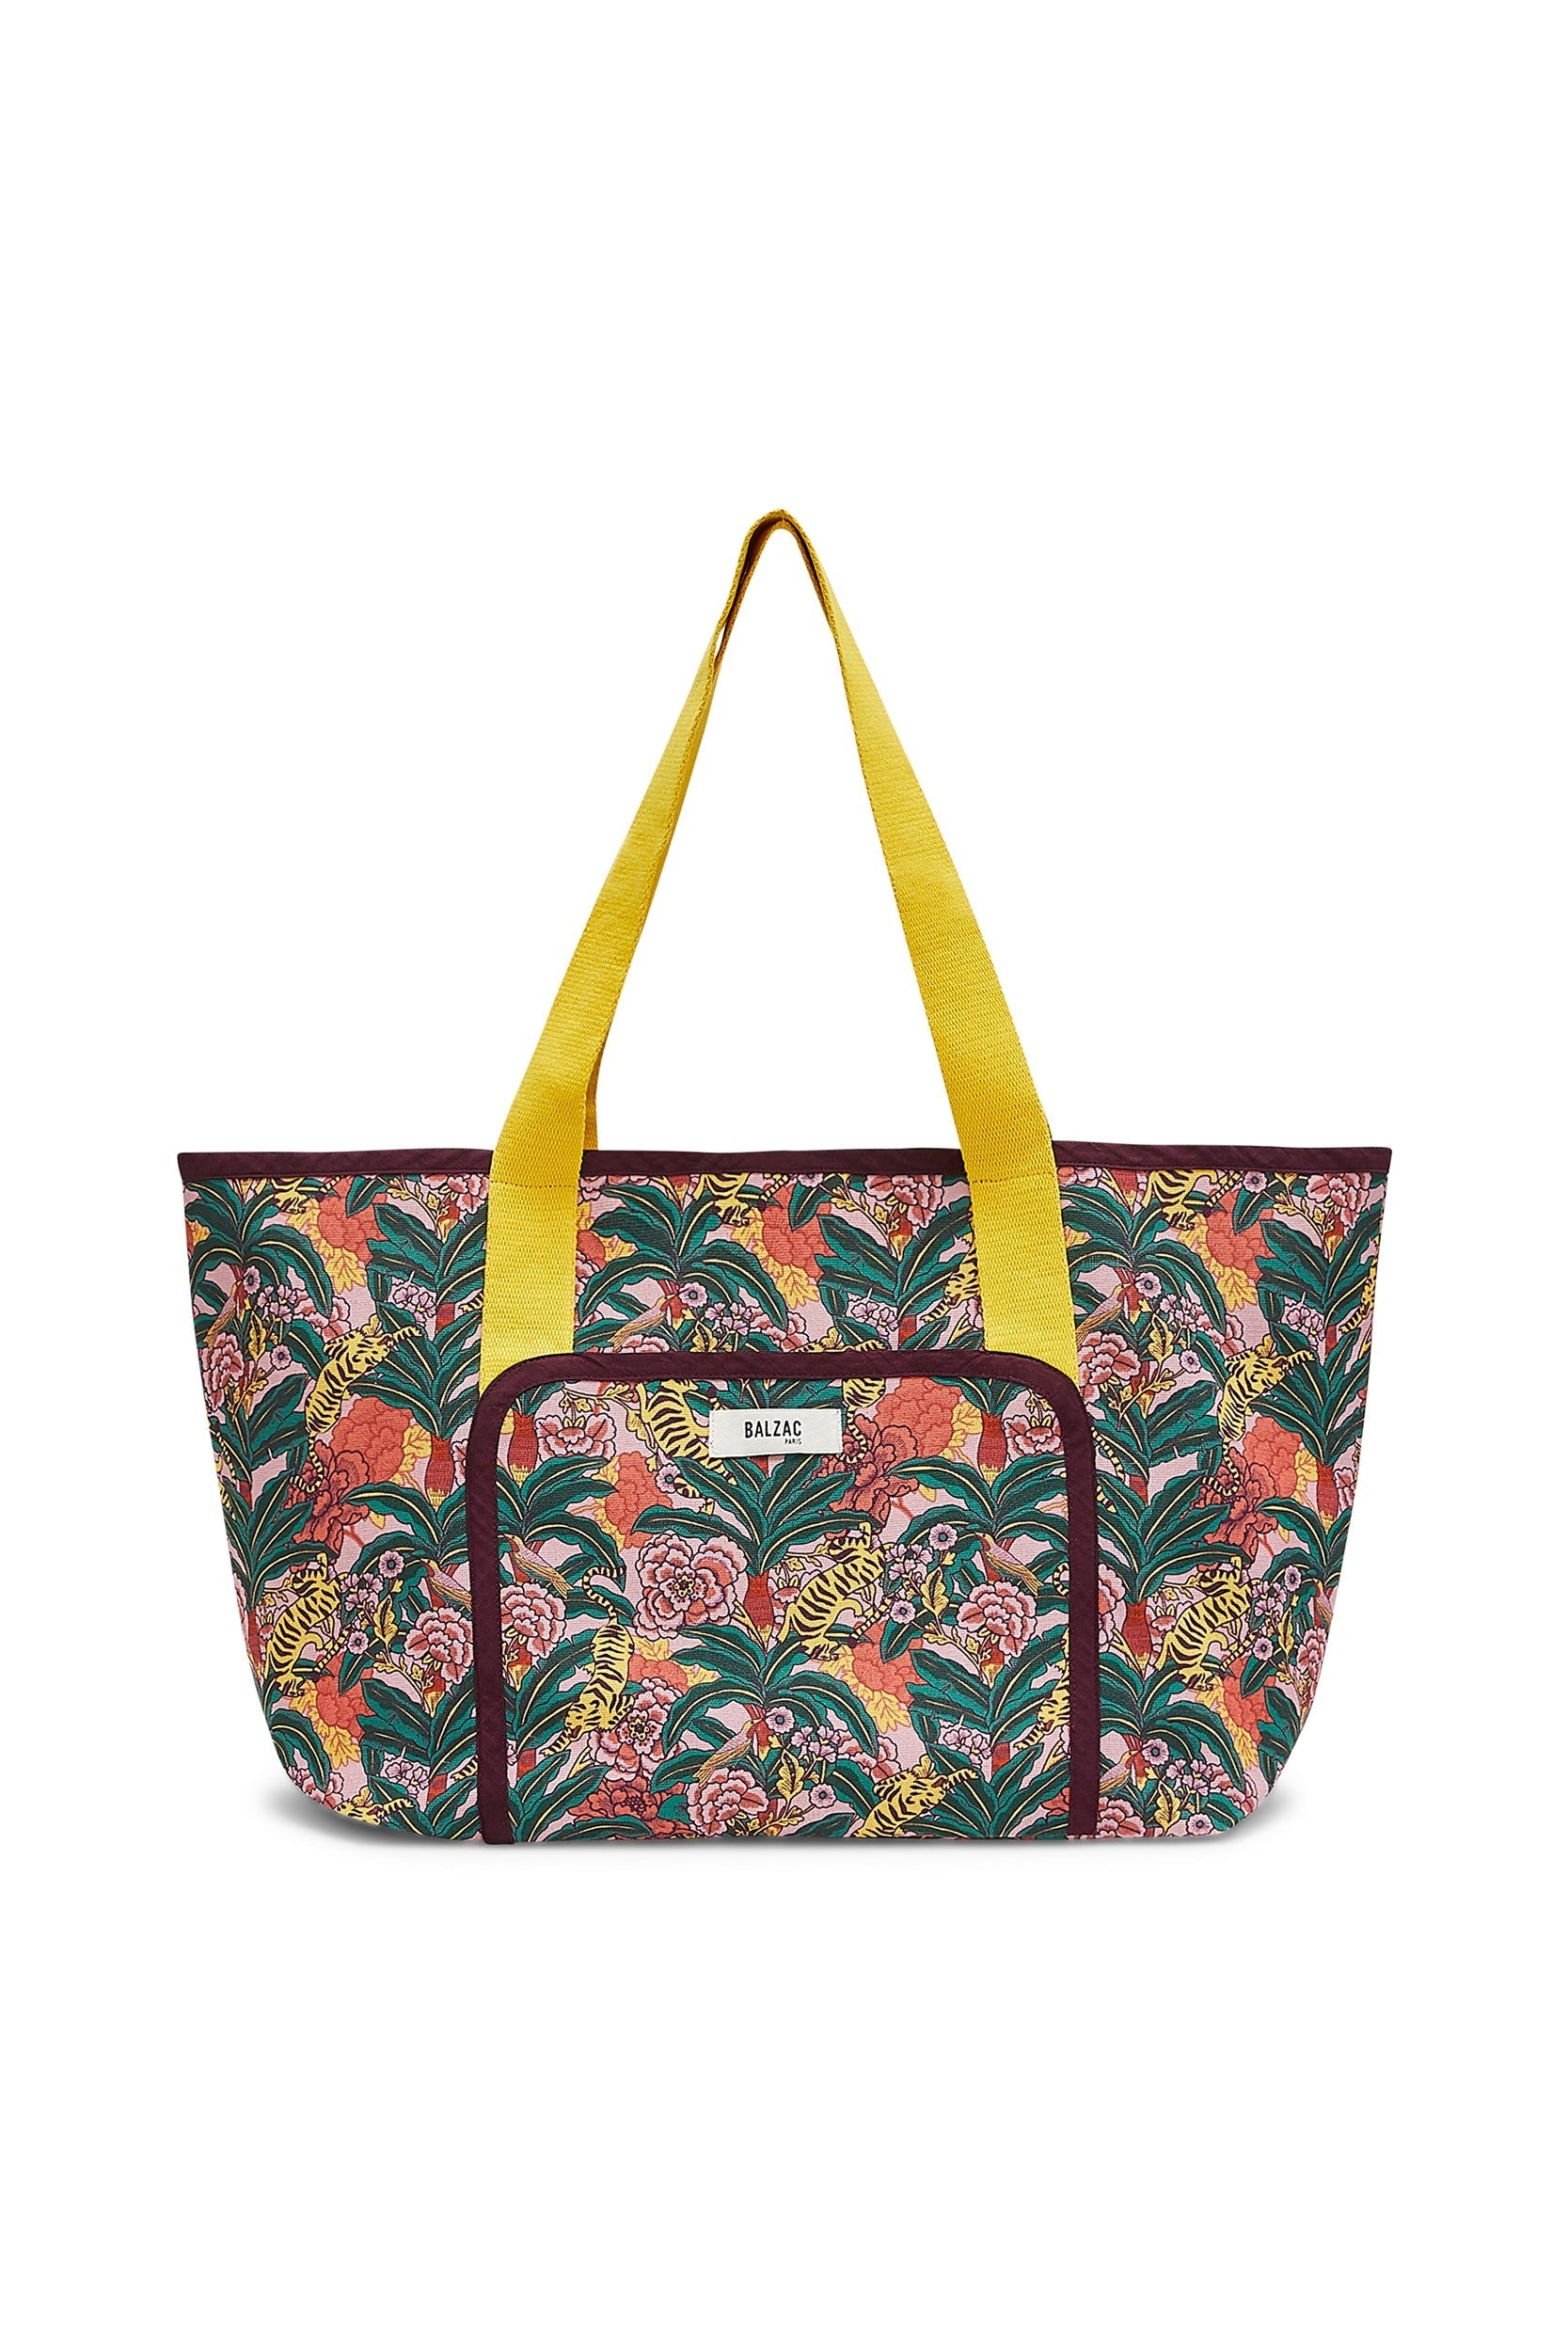 floral tiger print contemporary bag